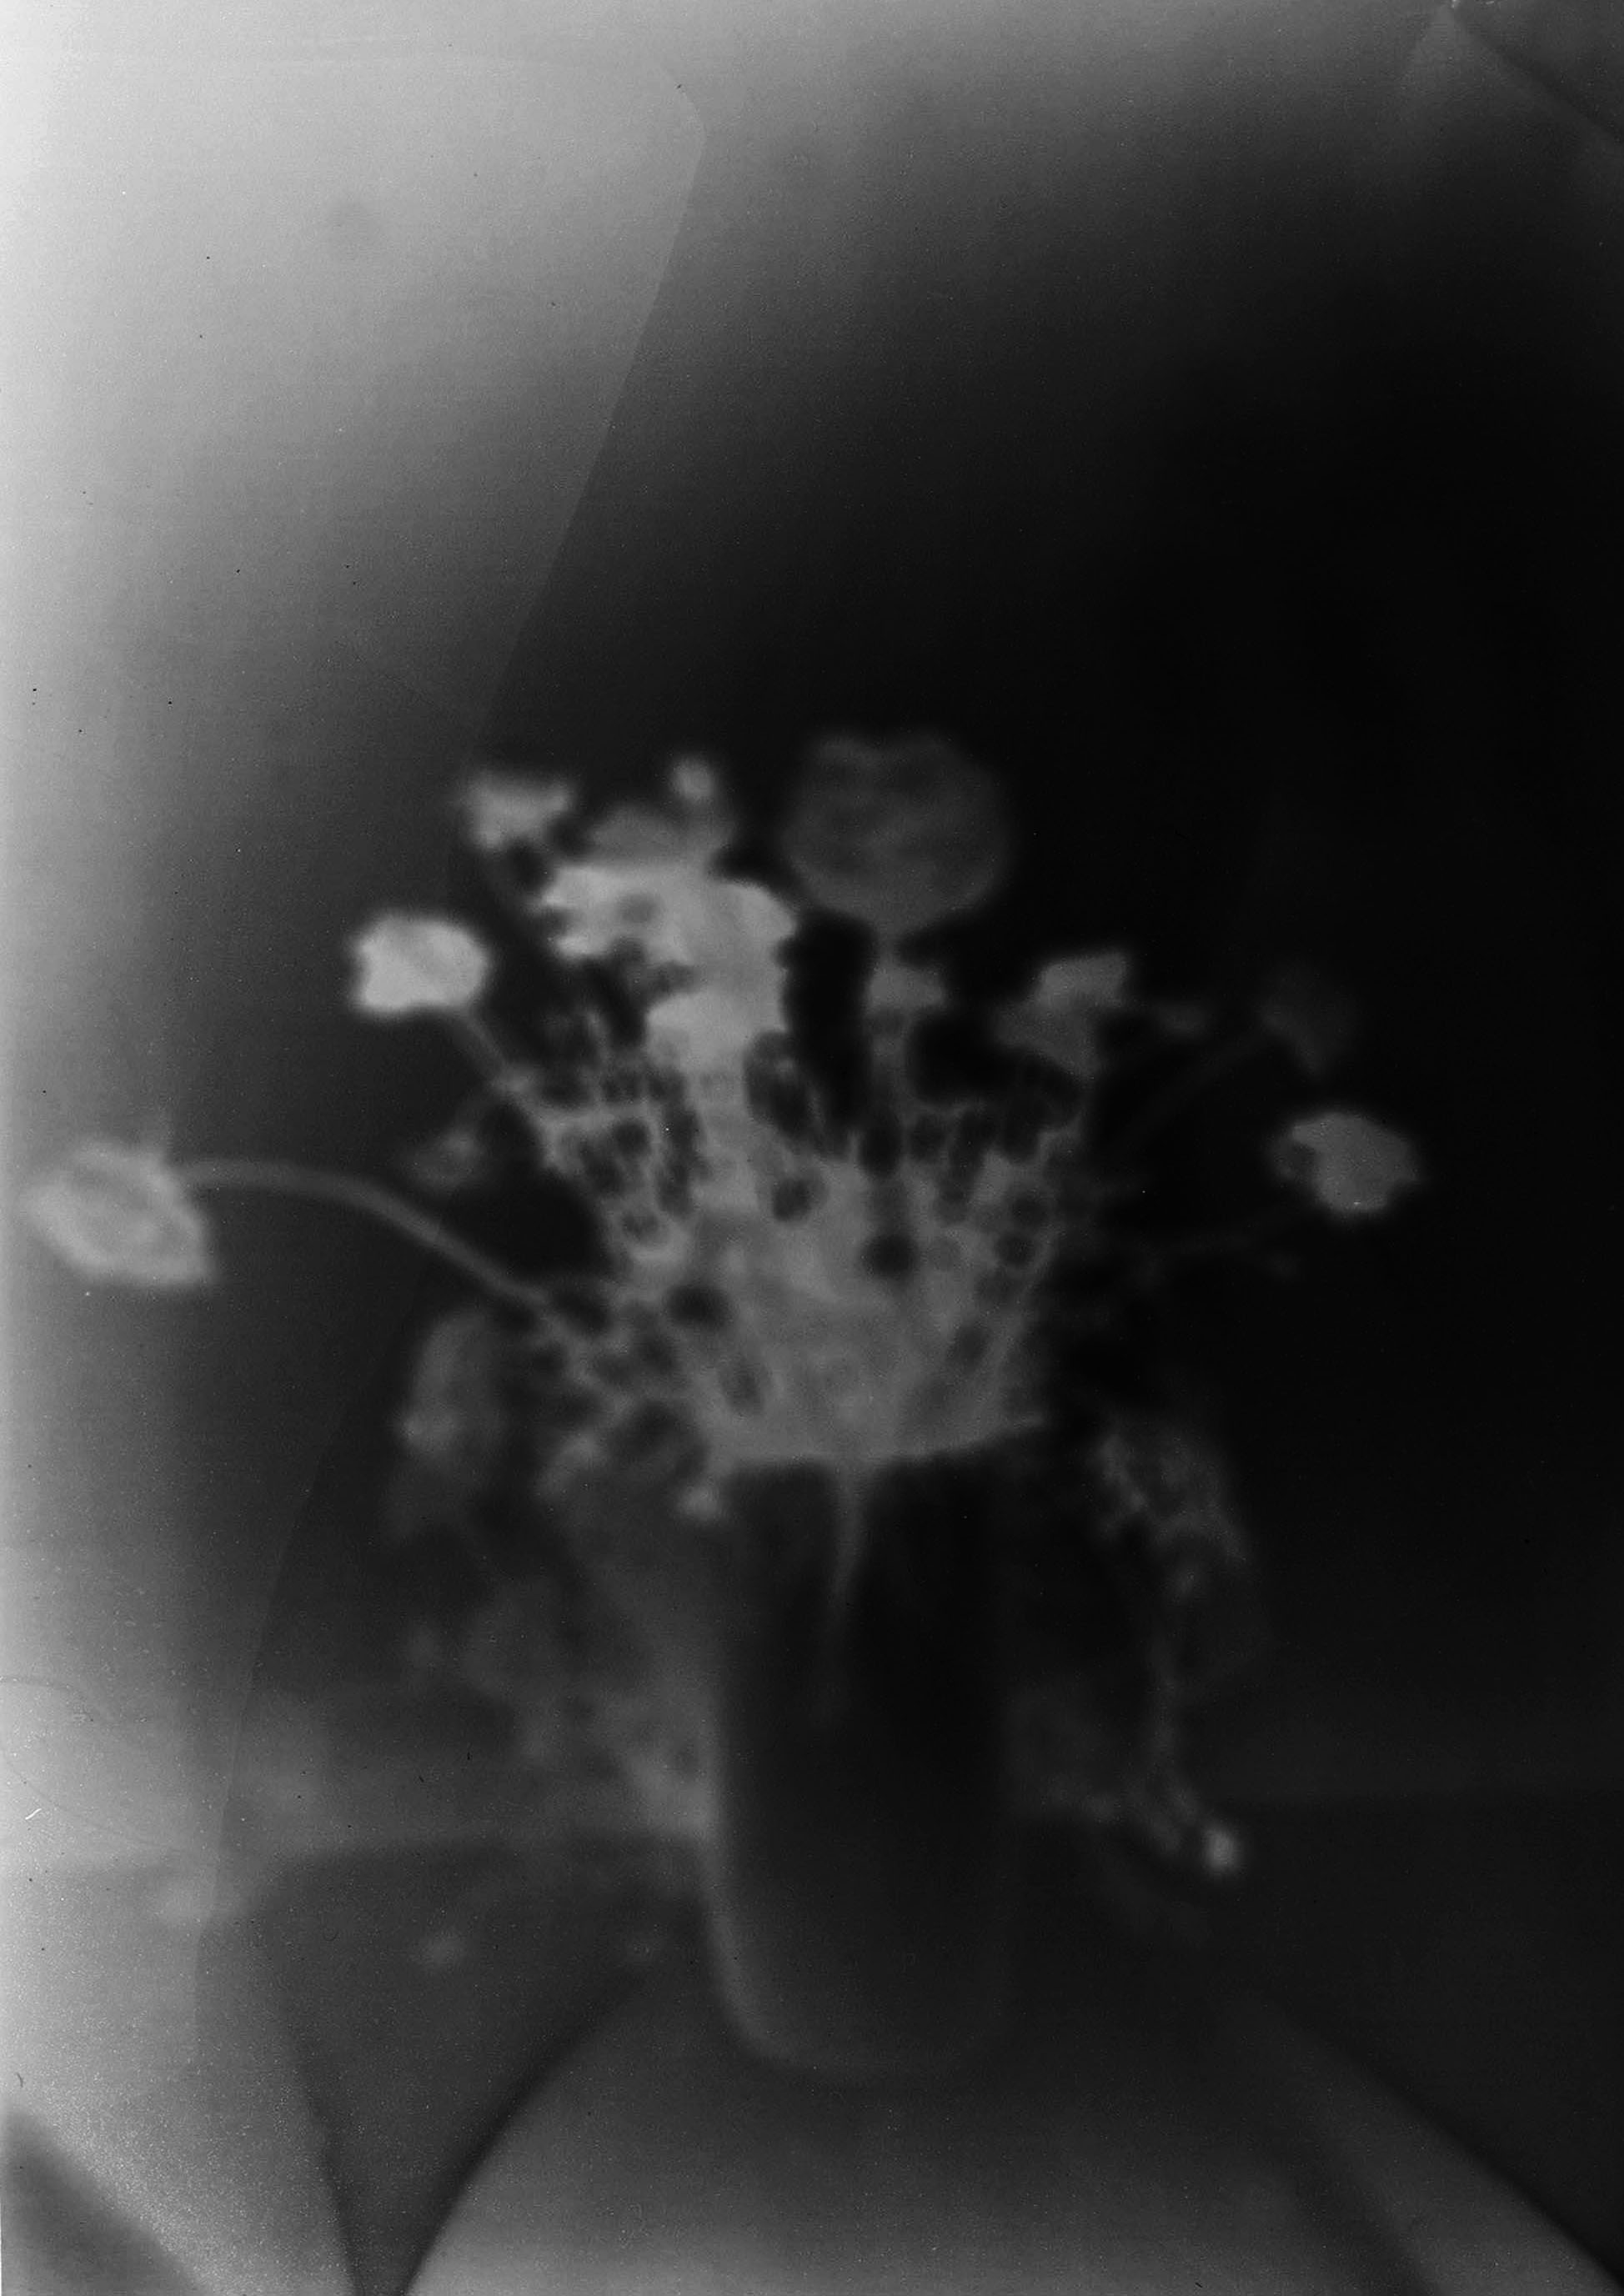 'Blumen II', 2011/15, Pinhole photograph, laser-print on 180gsm cartridge paper, 12 x 18 cm